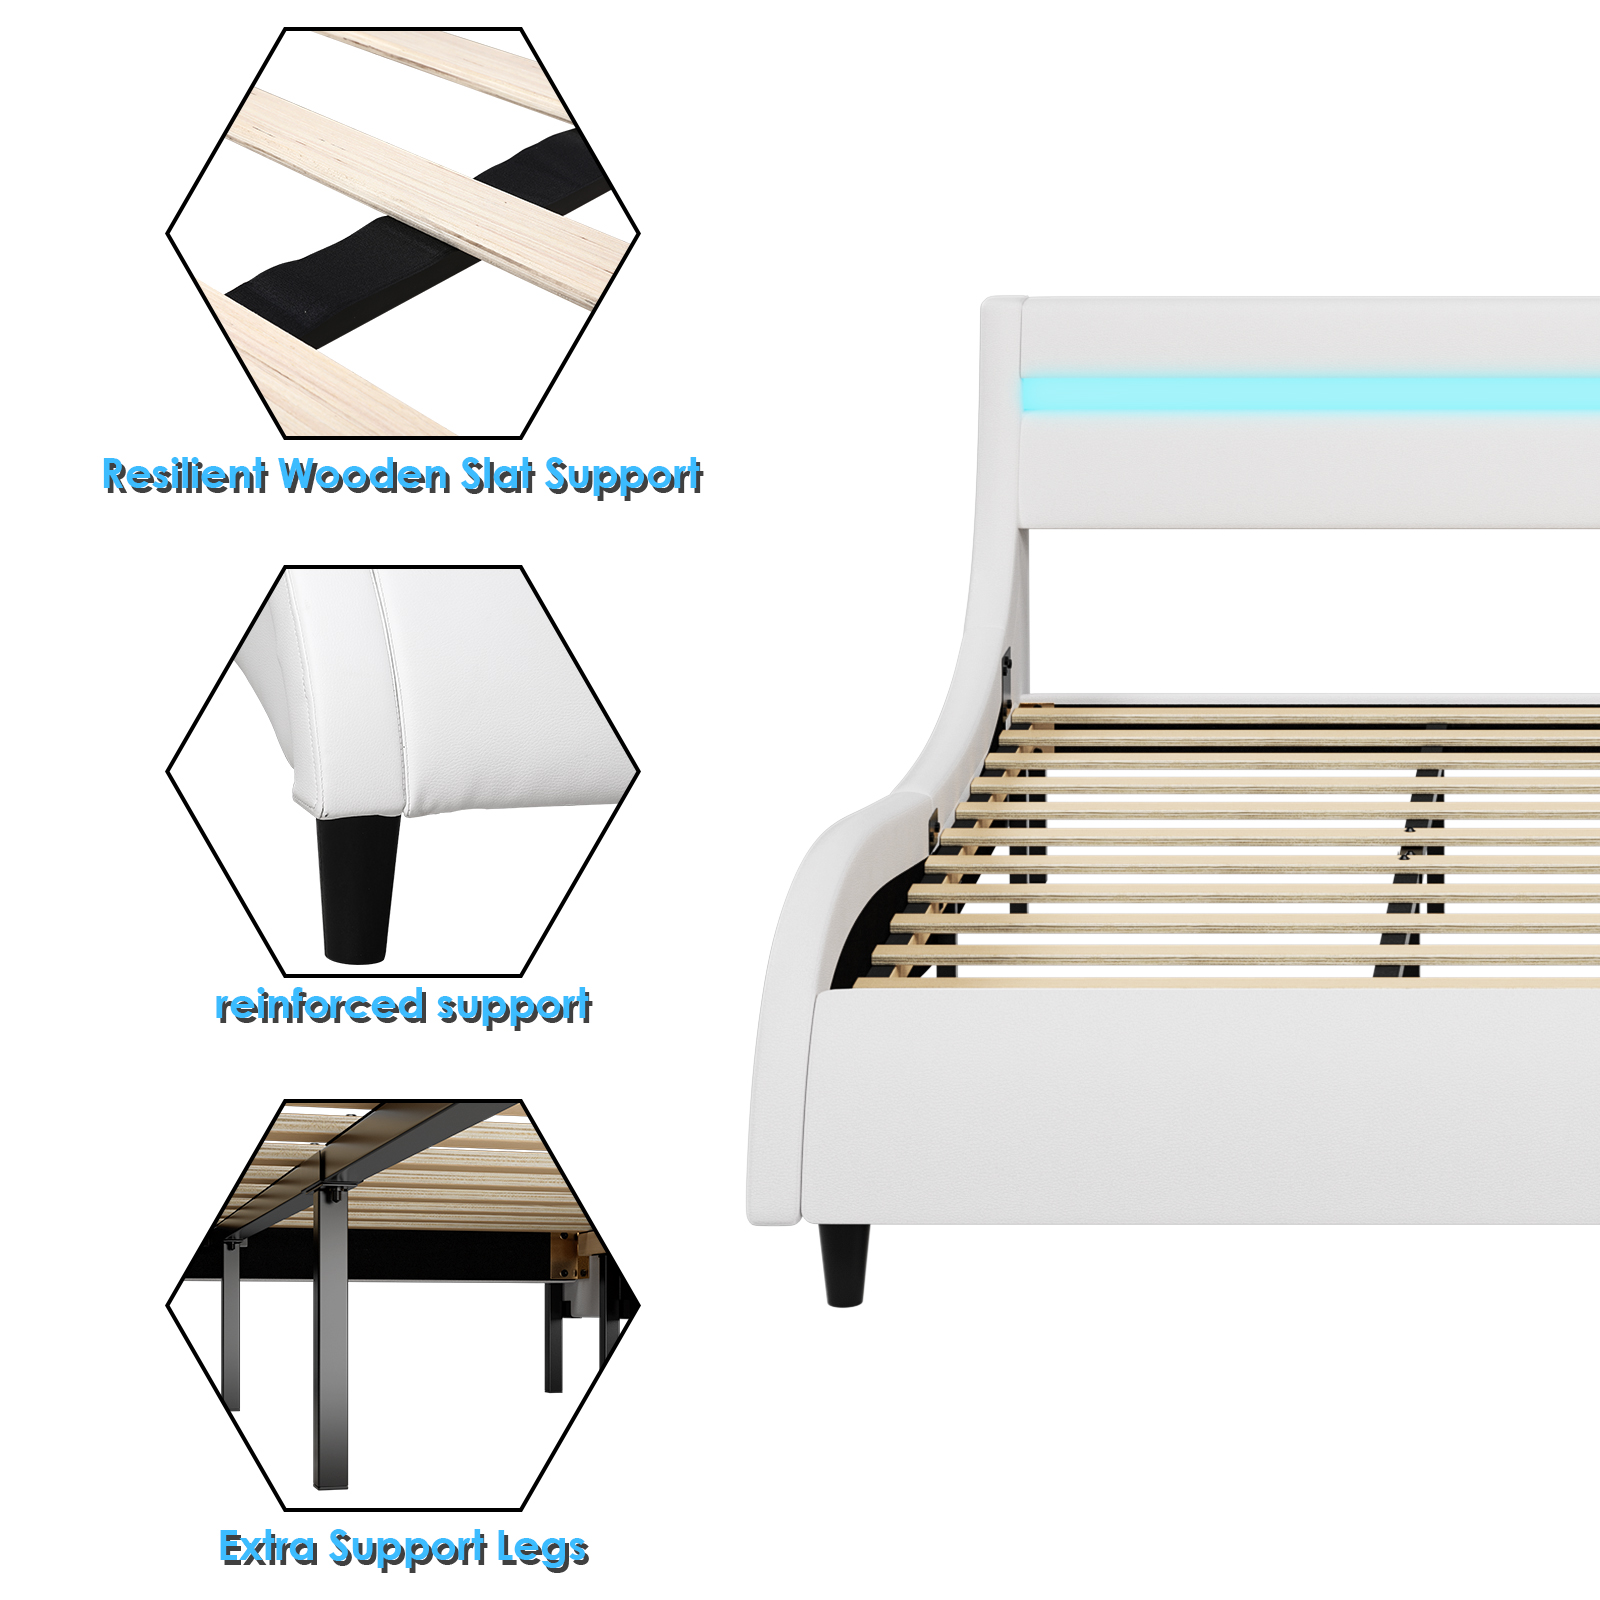 Homfa Full Size Bed Frame, 16 Colors Led Wooden Platform Bed Frame with Adjustable Upholstered Headboard, White - image 3 of 8